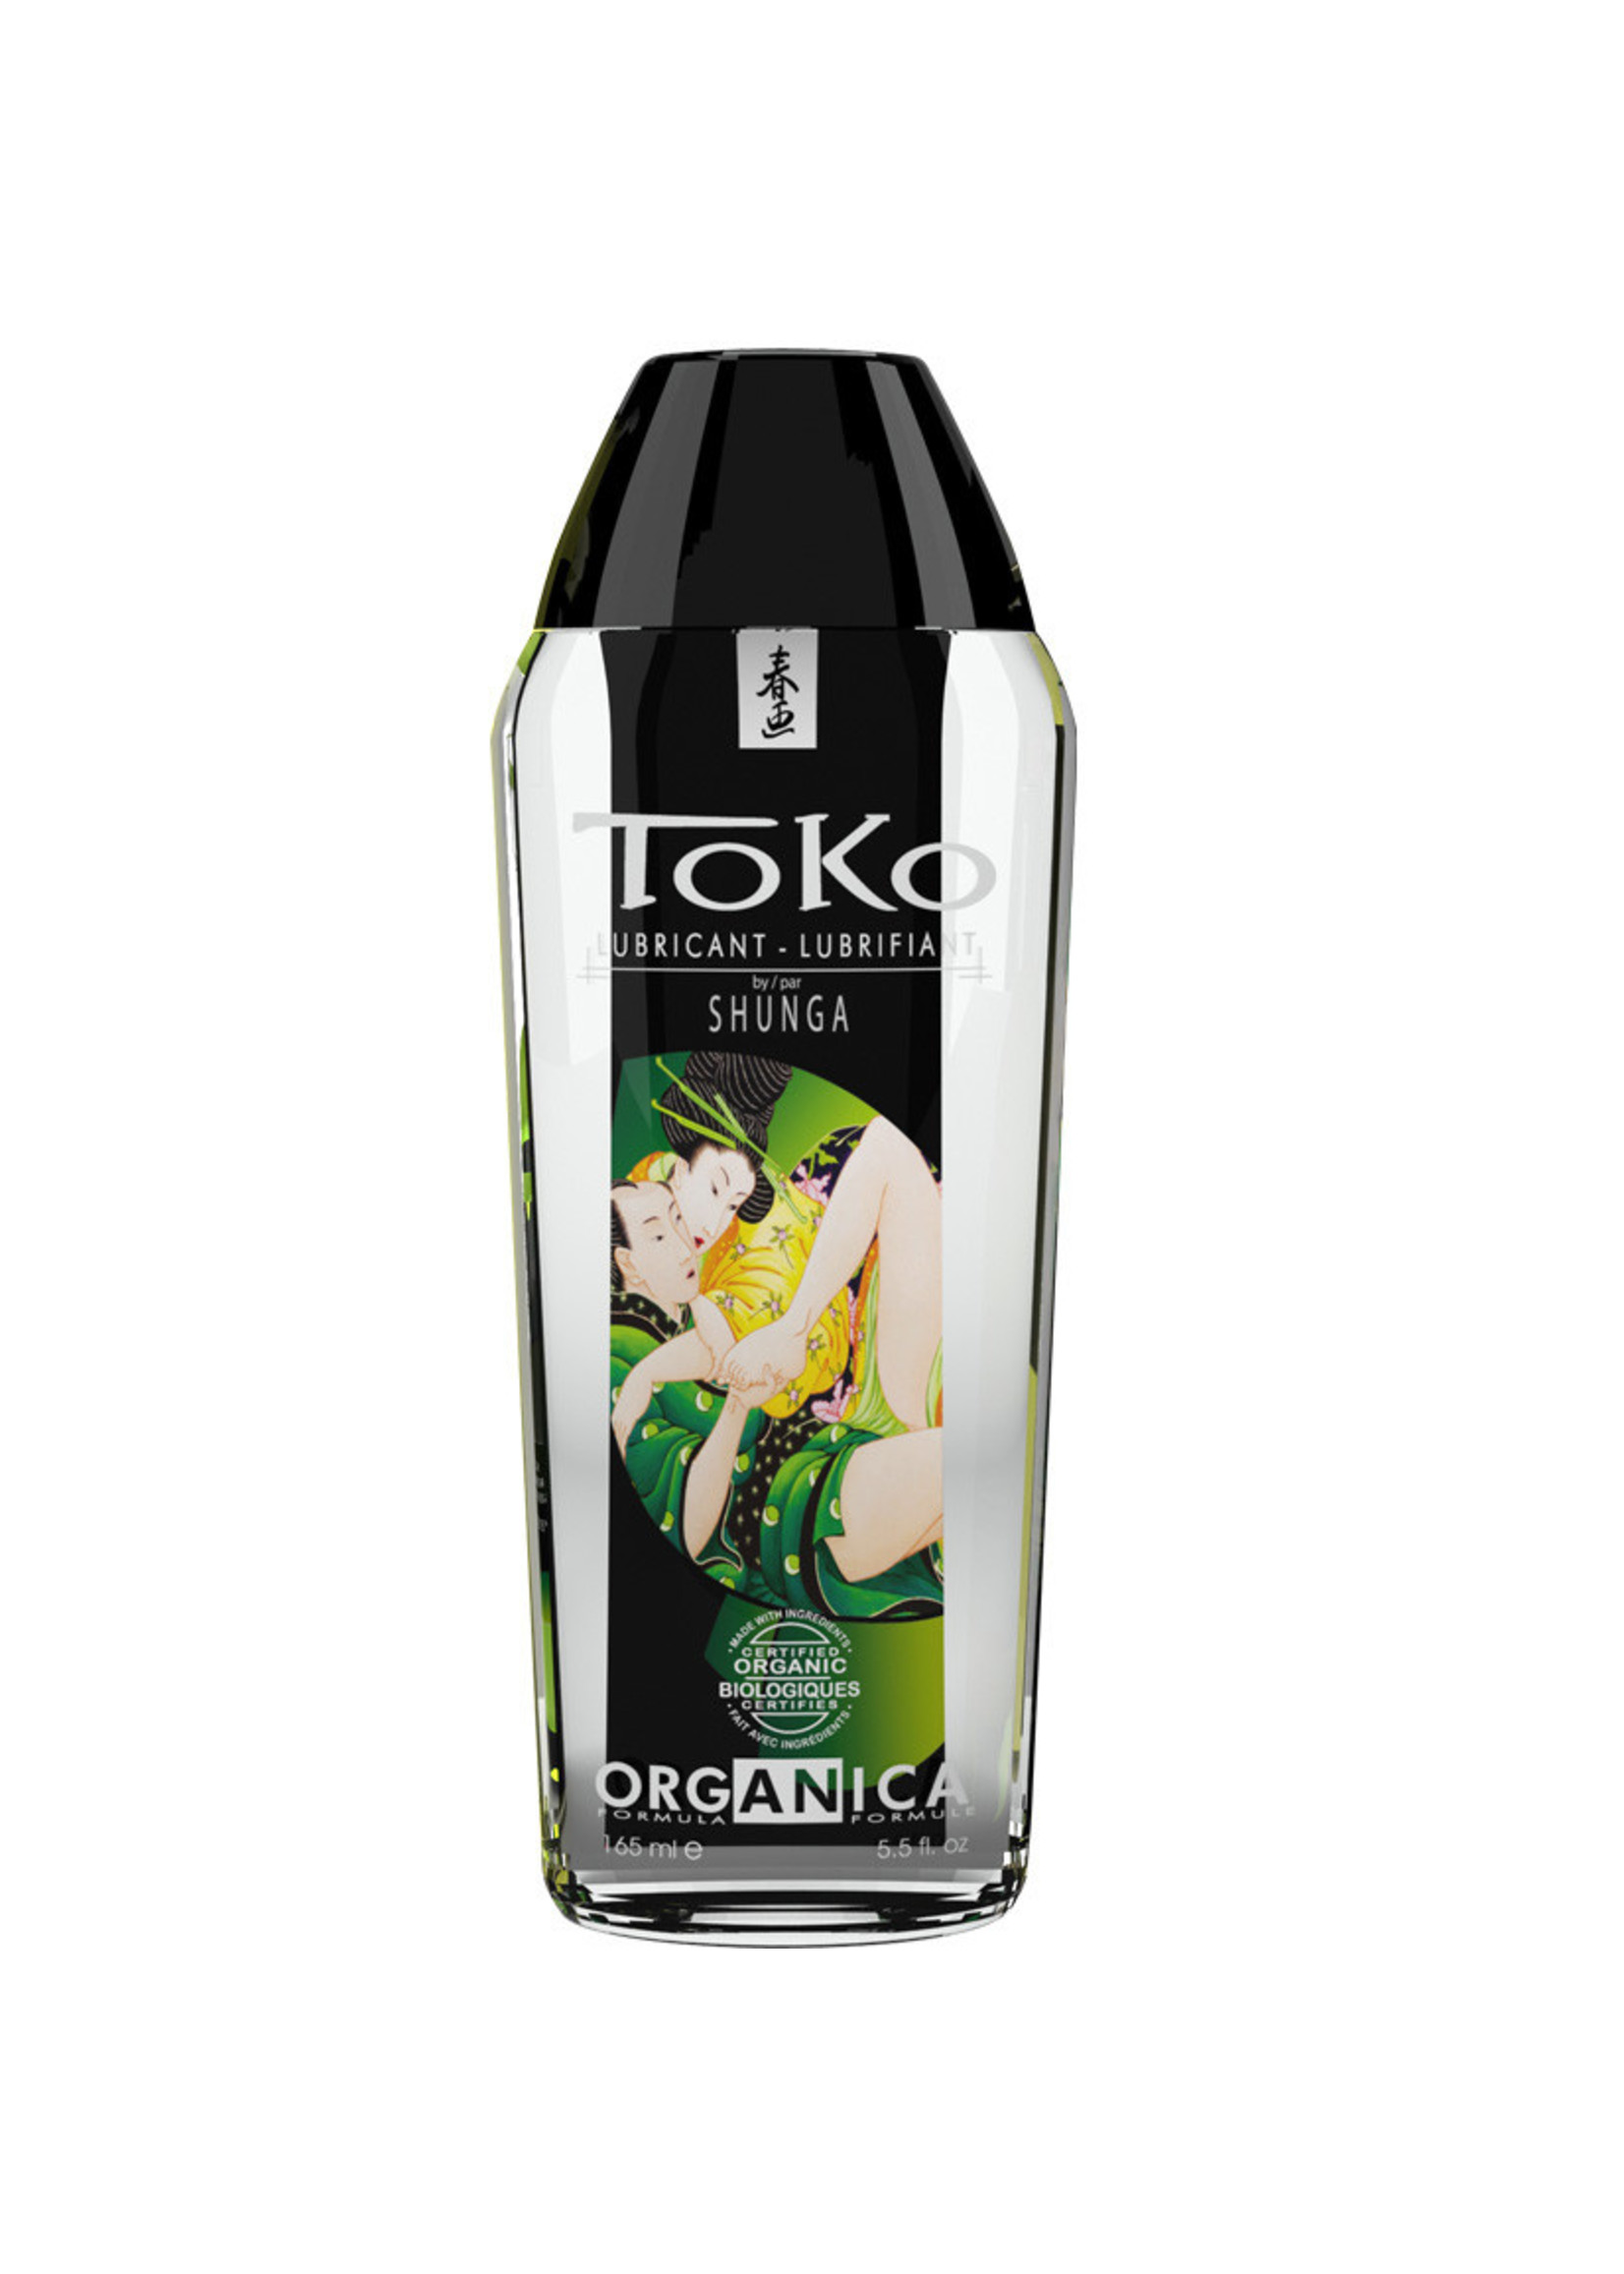 Shunga- TOKO Organica 5.5oz